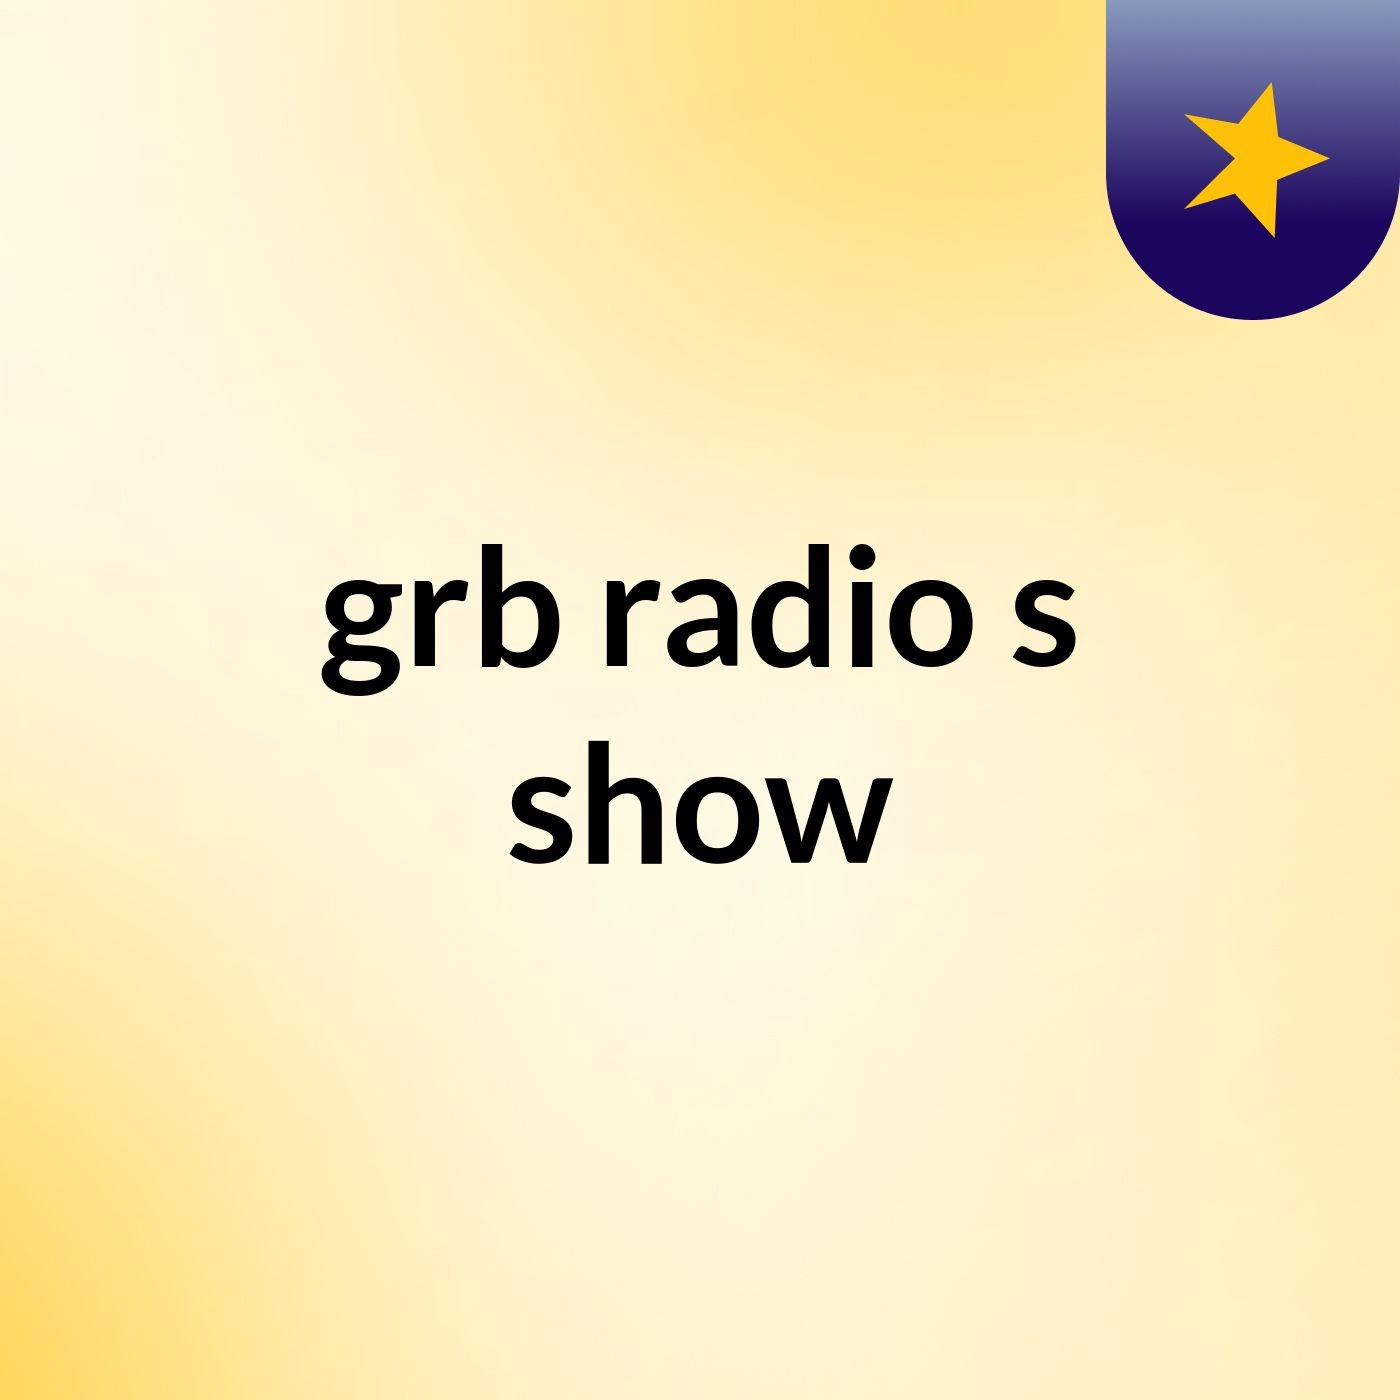 grb radio's show